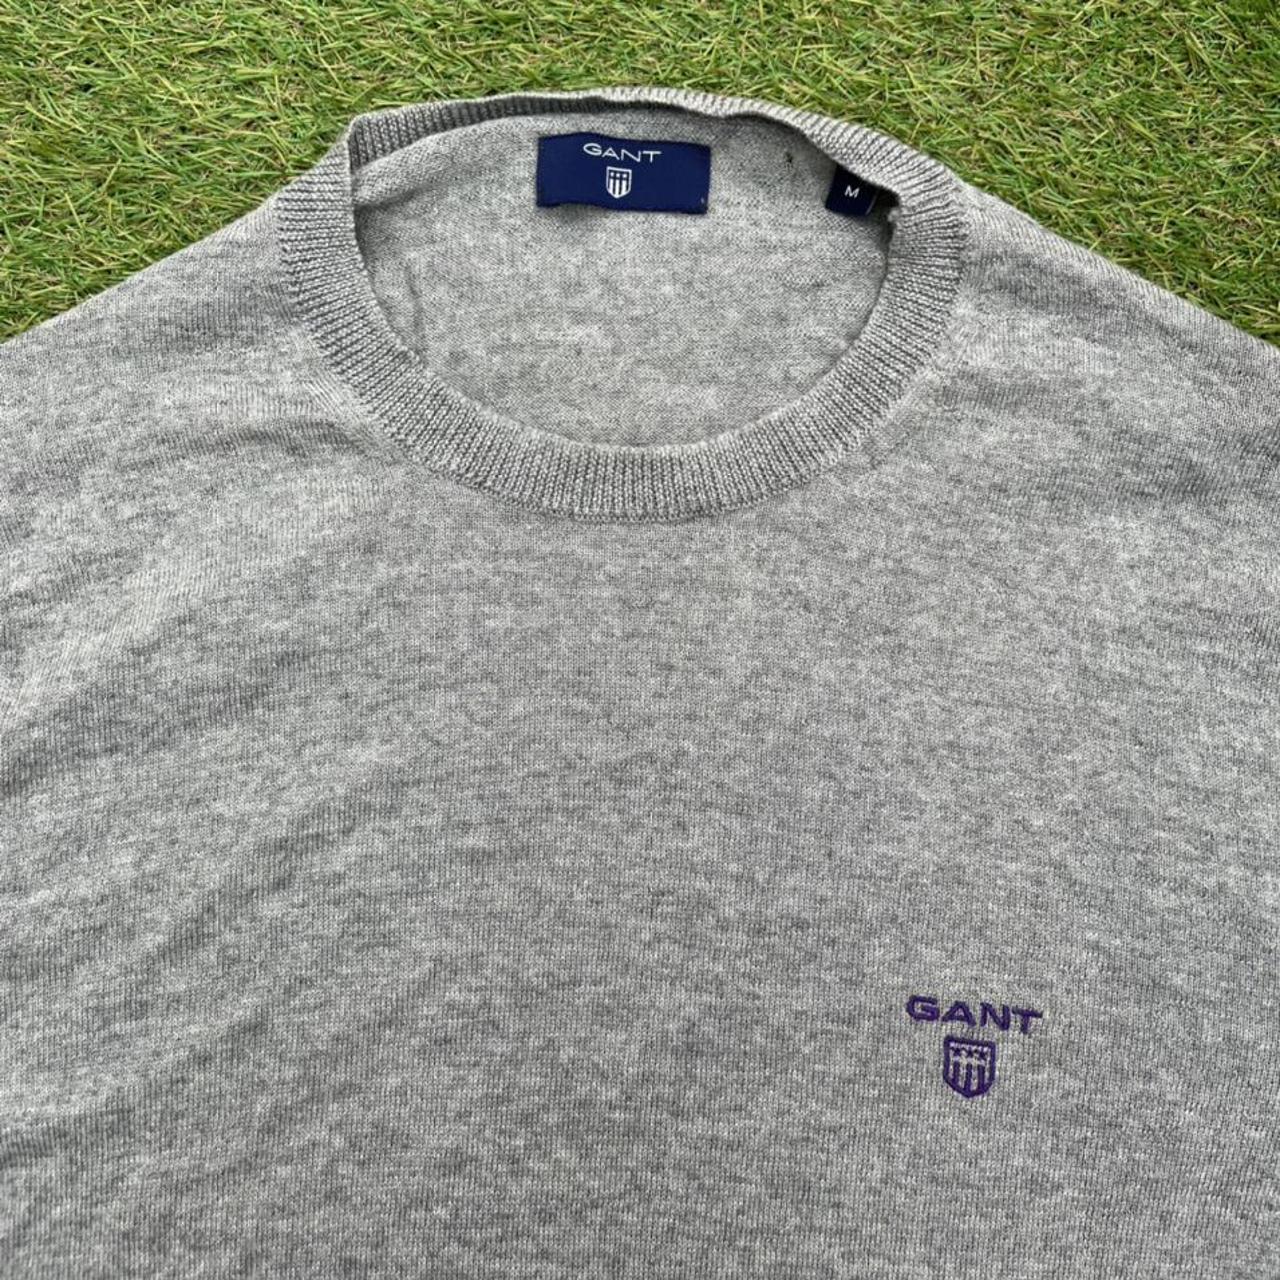 Product Image 3 - Men’s grey GANT sweatshirt /